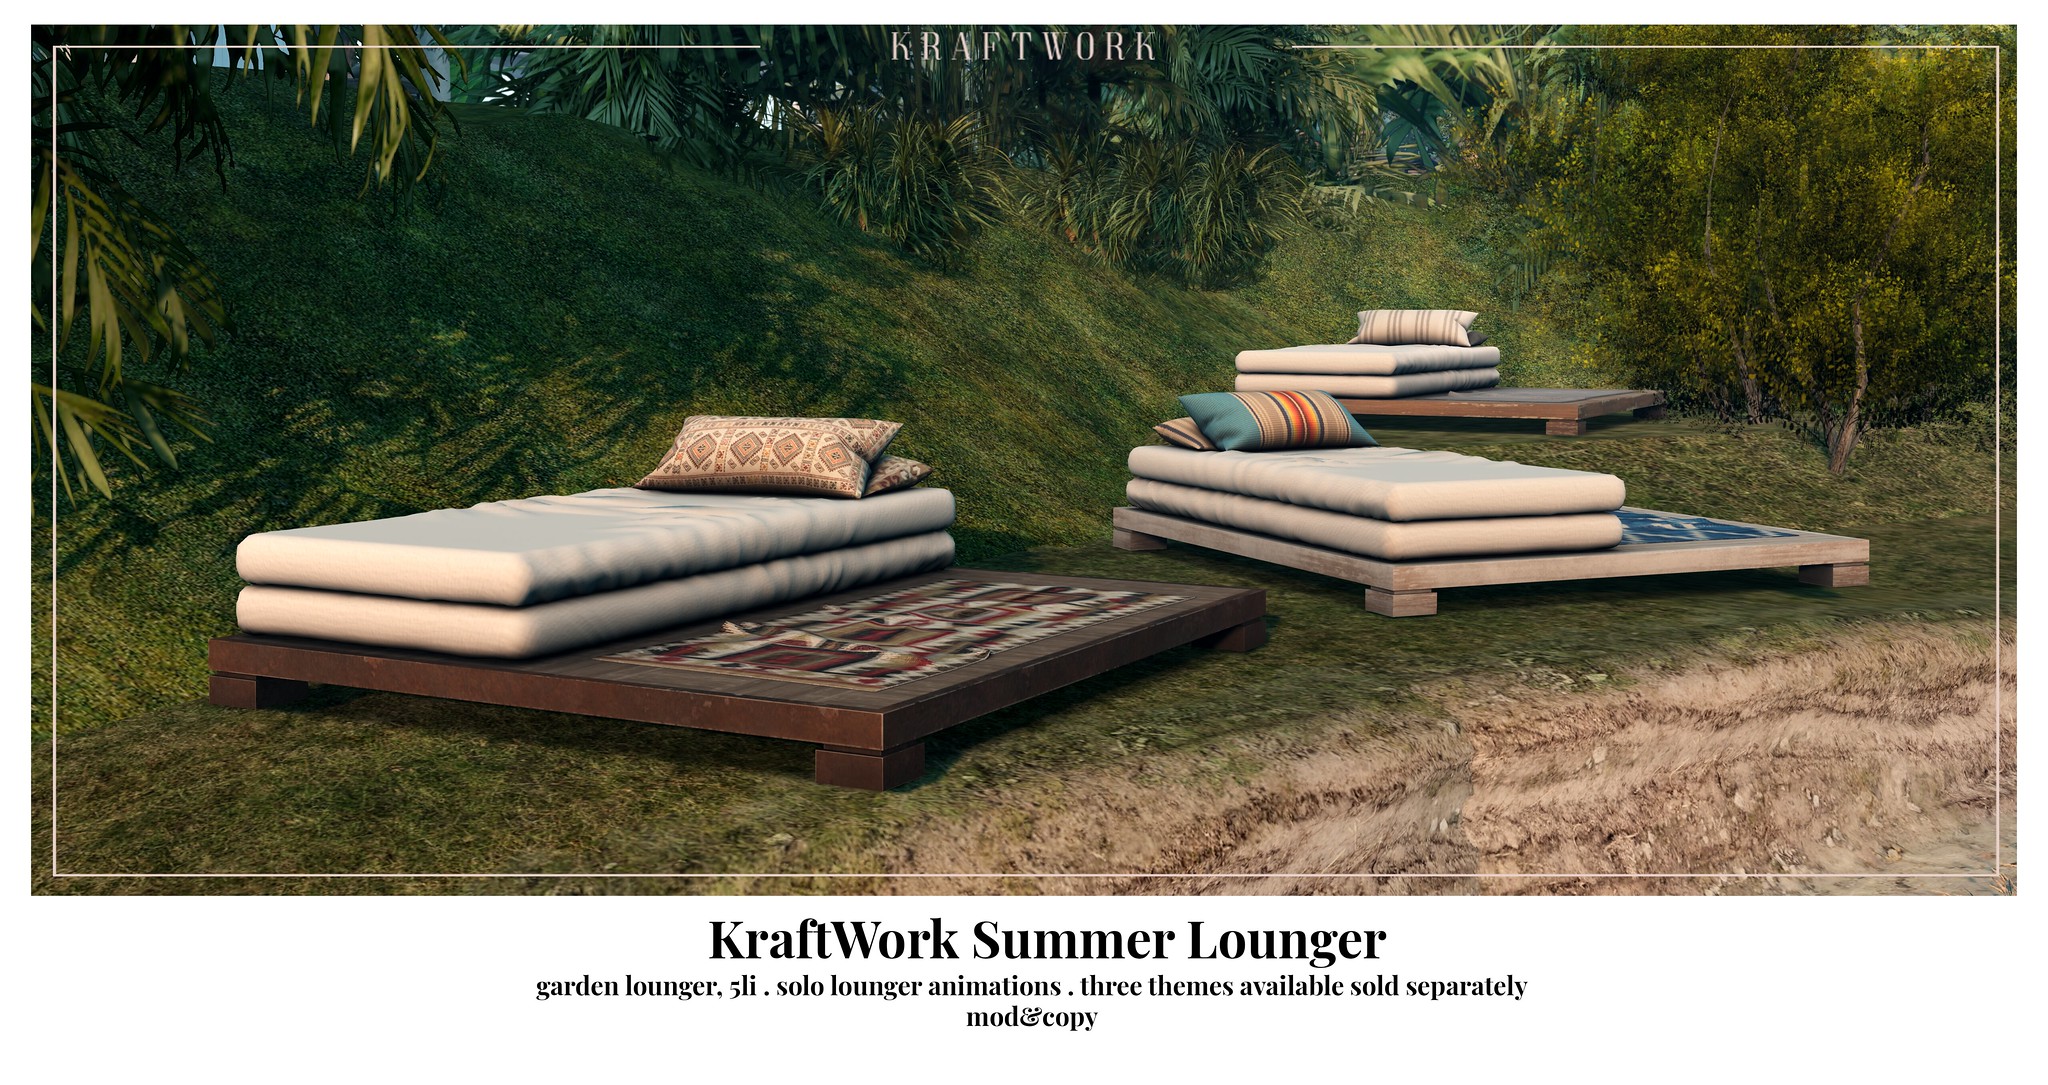 KraftWork Summer Lounger – The Liaison Collaborative